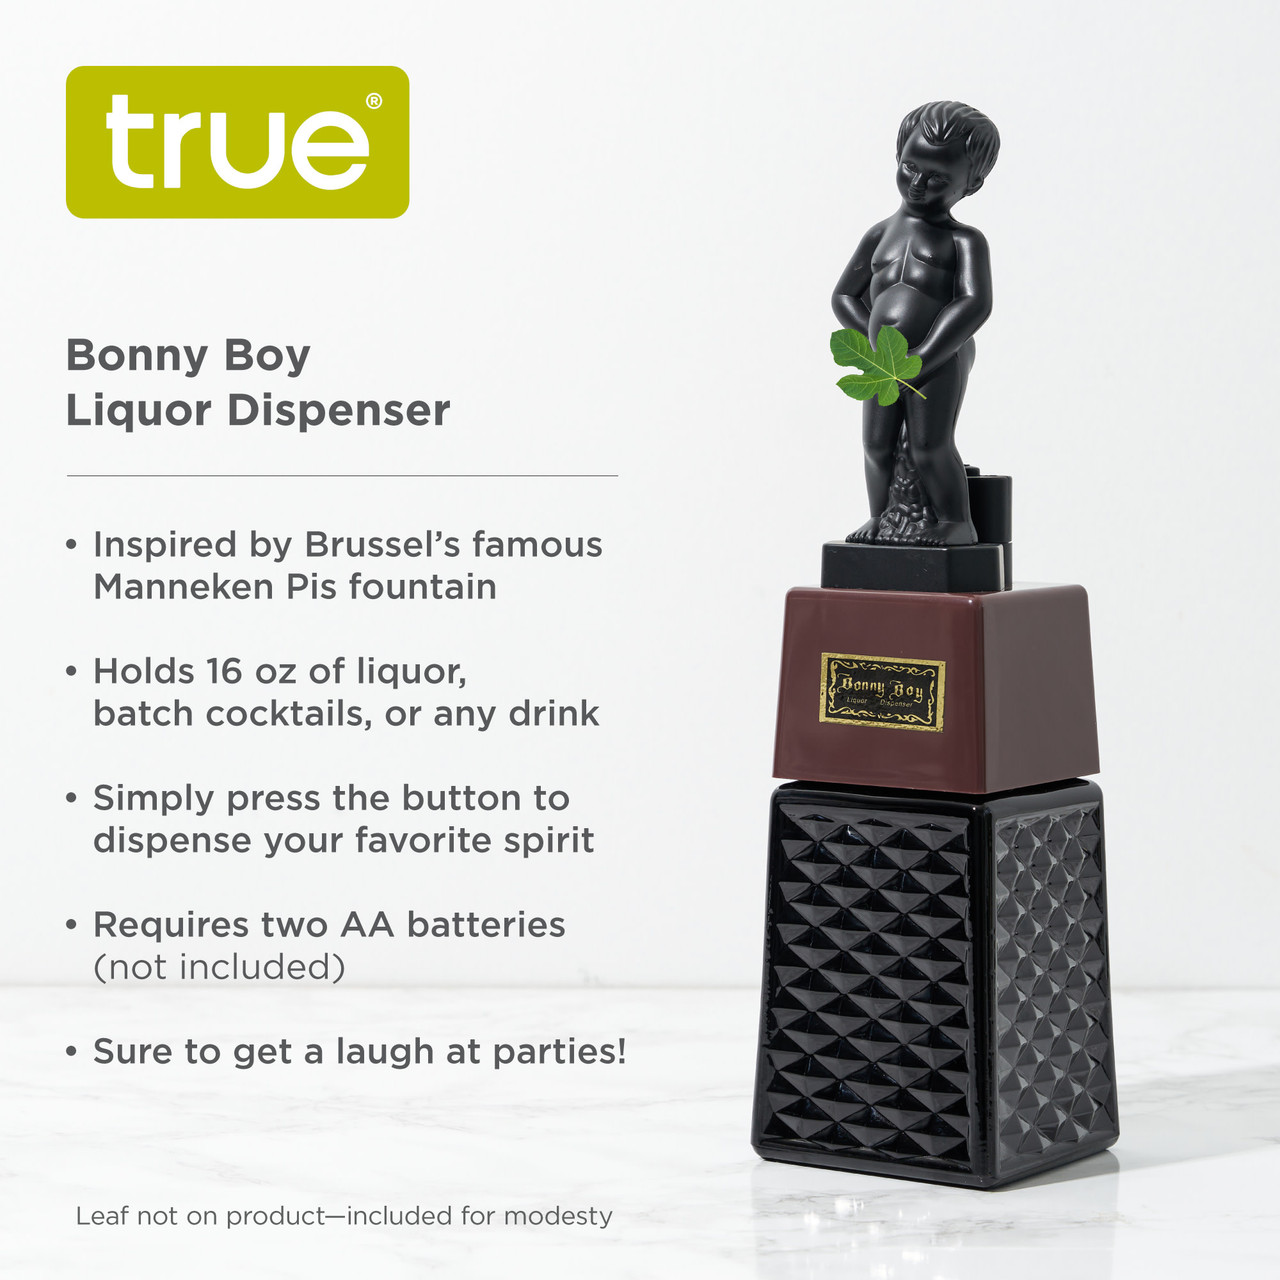 Bonny Boy Liquor Dispenser by True